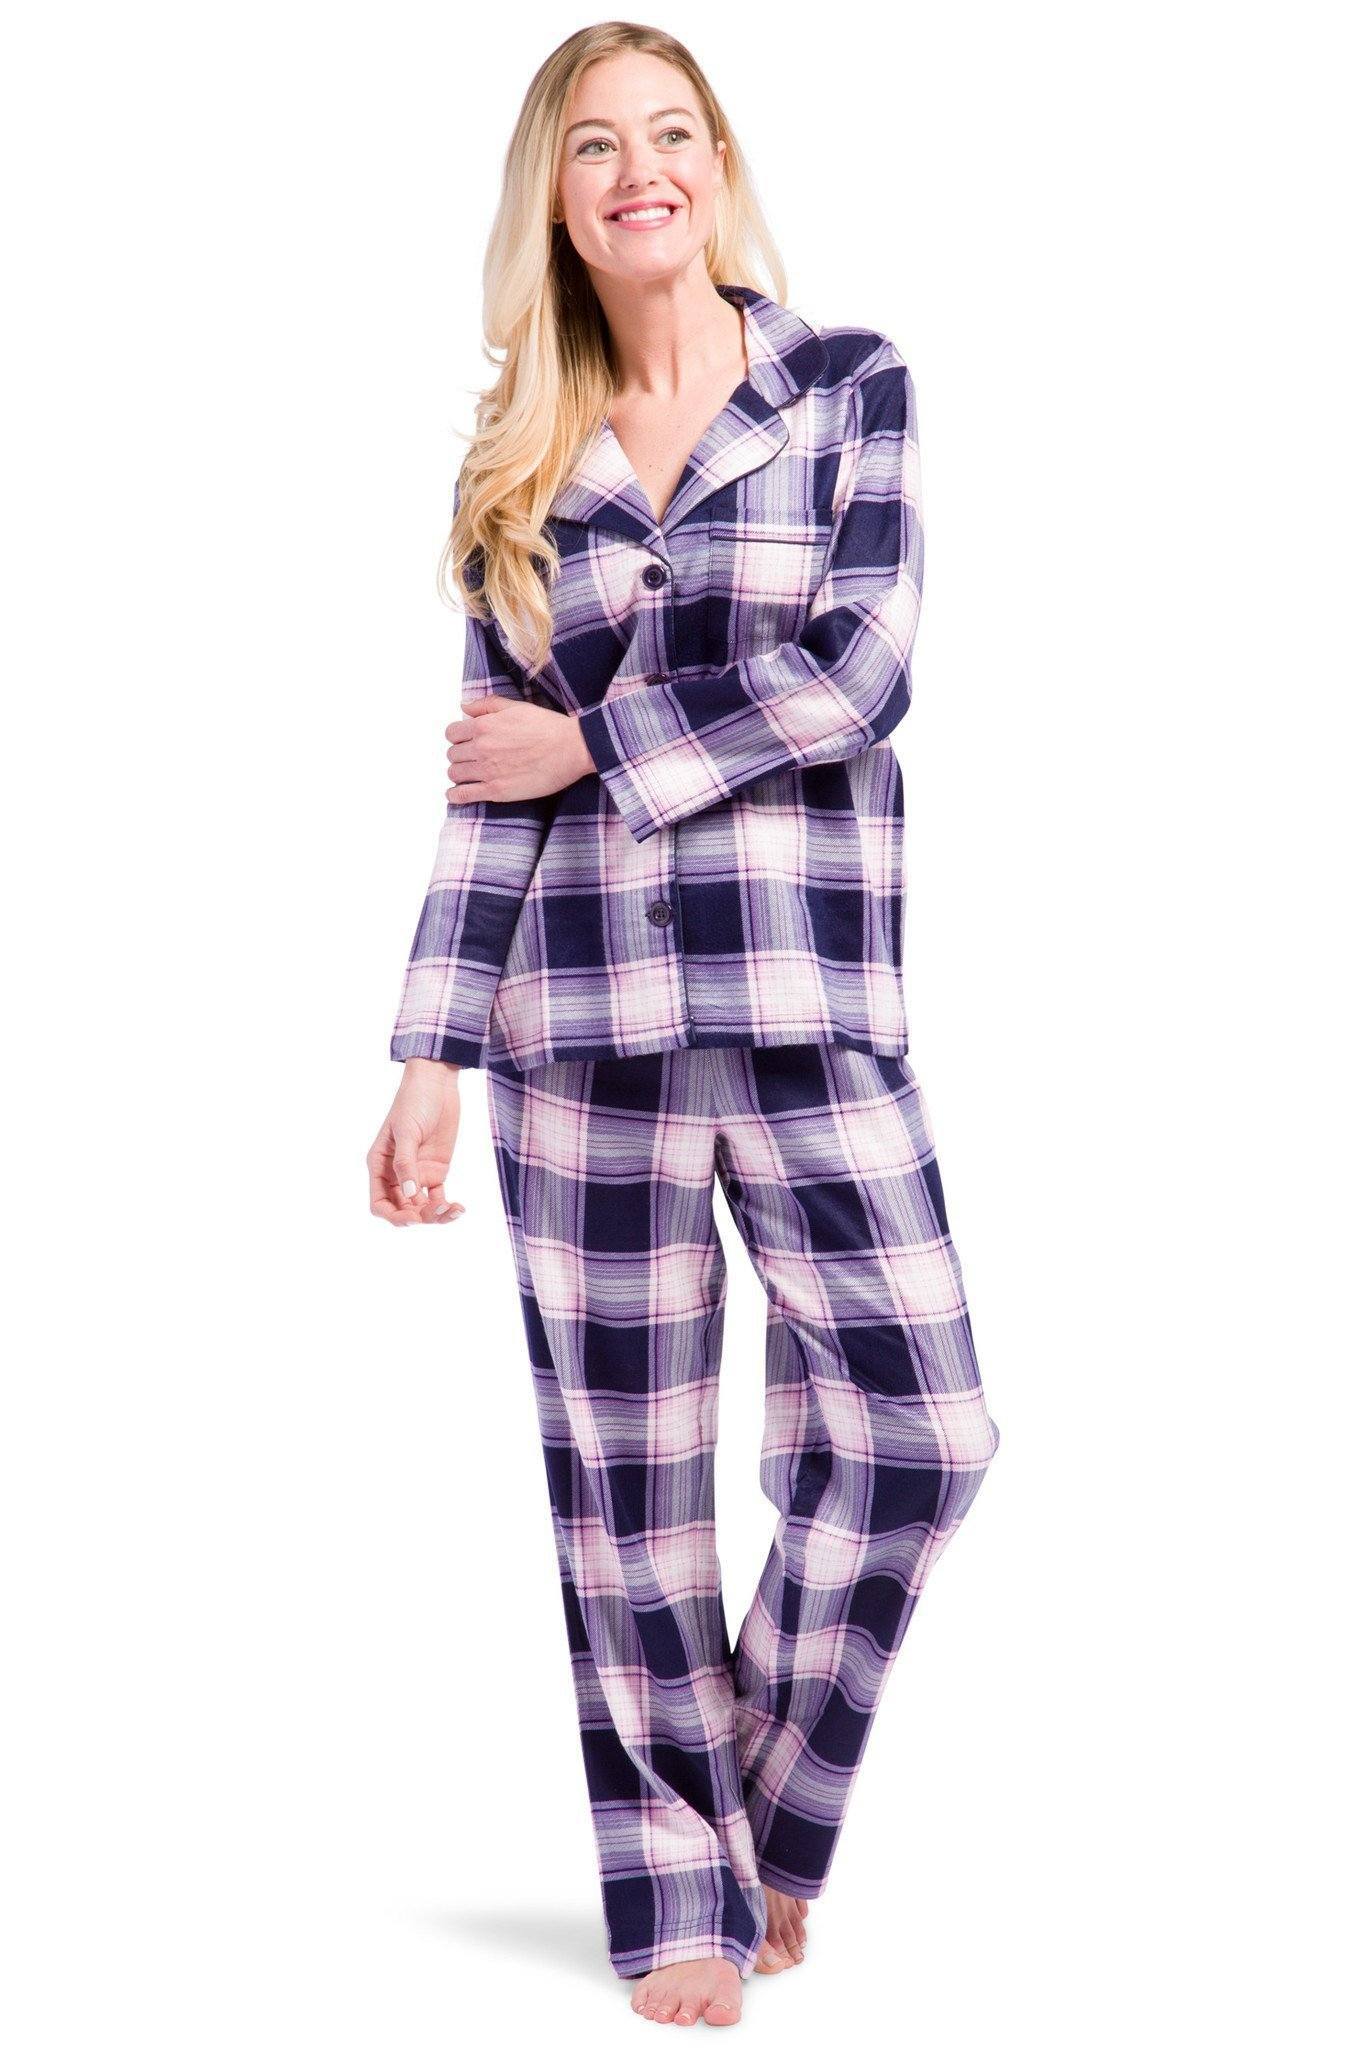  Femofit - Women's Pajama Sets / Women's Sleepwear: Clothing,  Shoes & Accessories